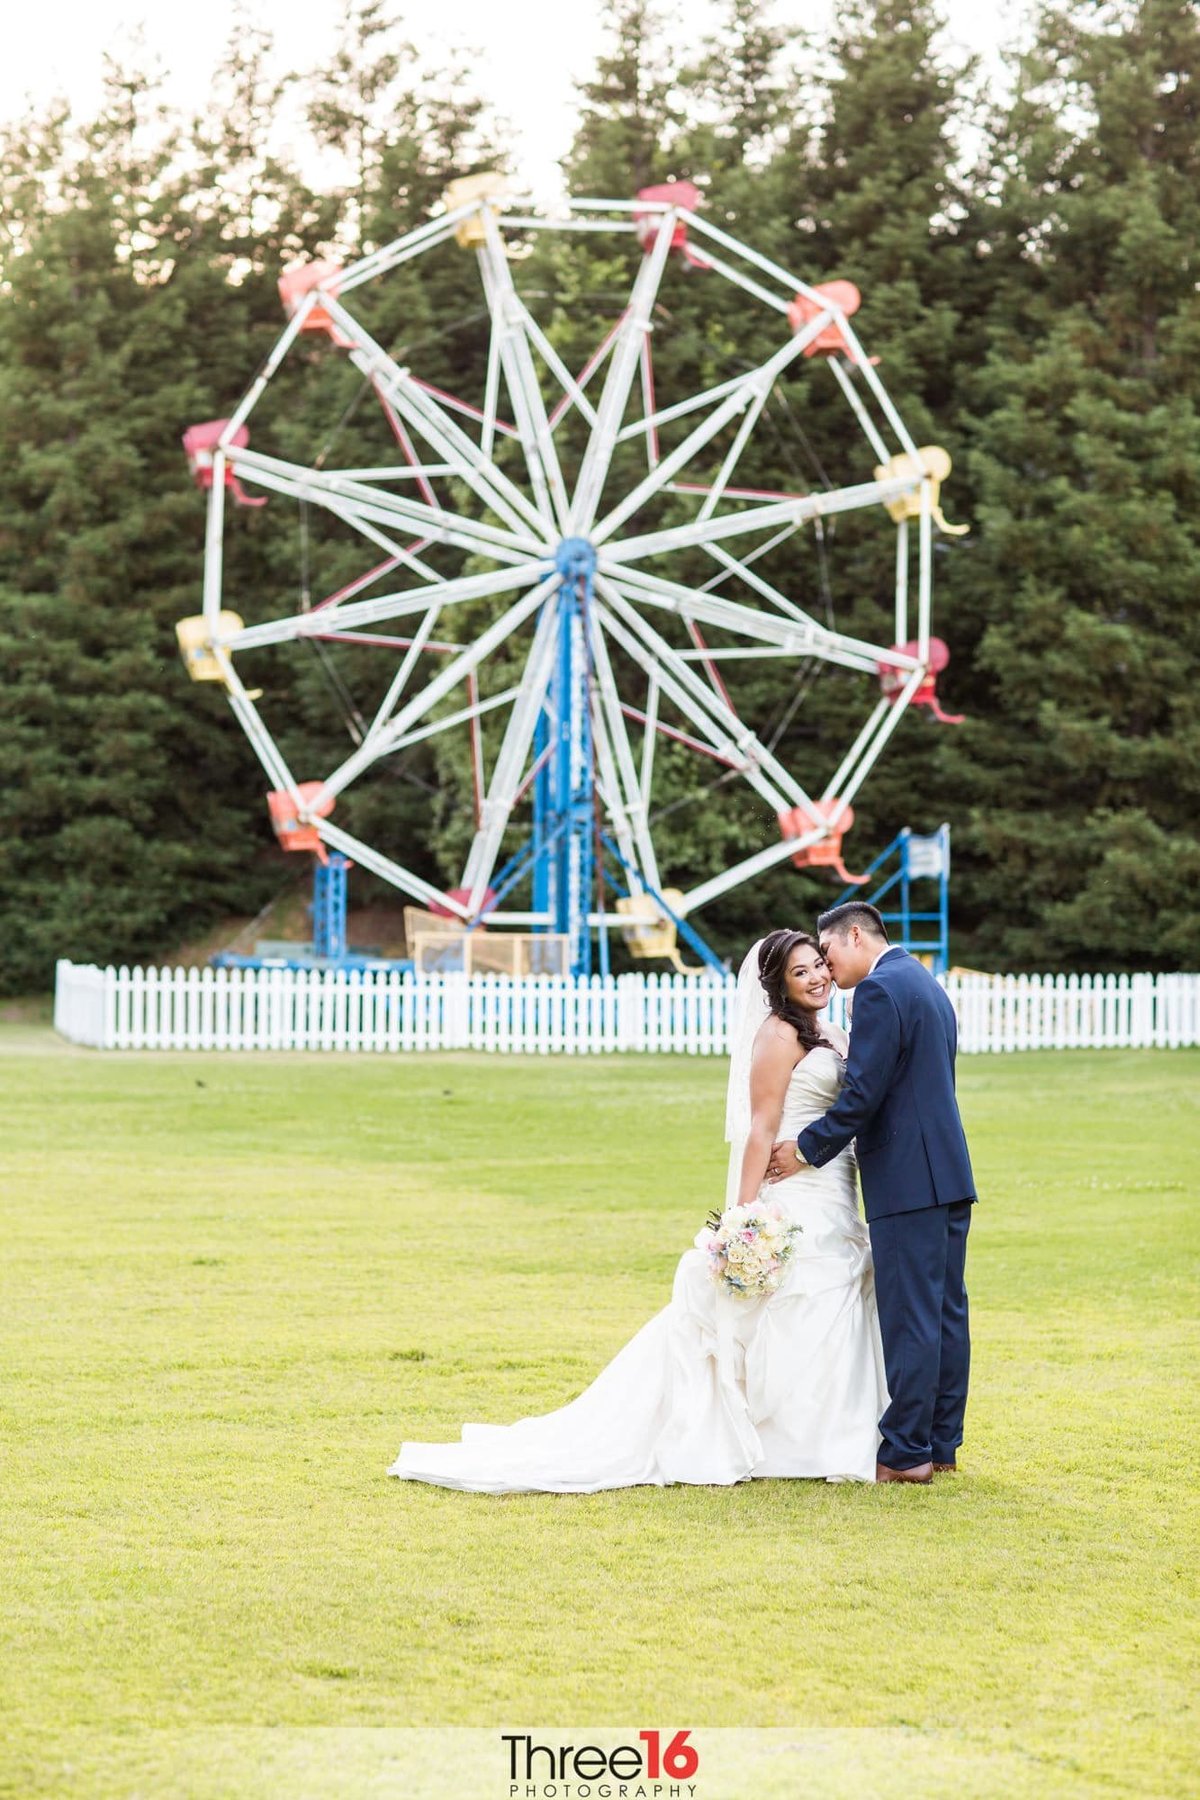 Groom kisses his Bride's cheek standing in front of the Ferris Wheel at Calamigos Ranch wedding venue in Malibu, CA